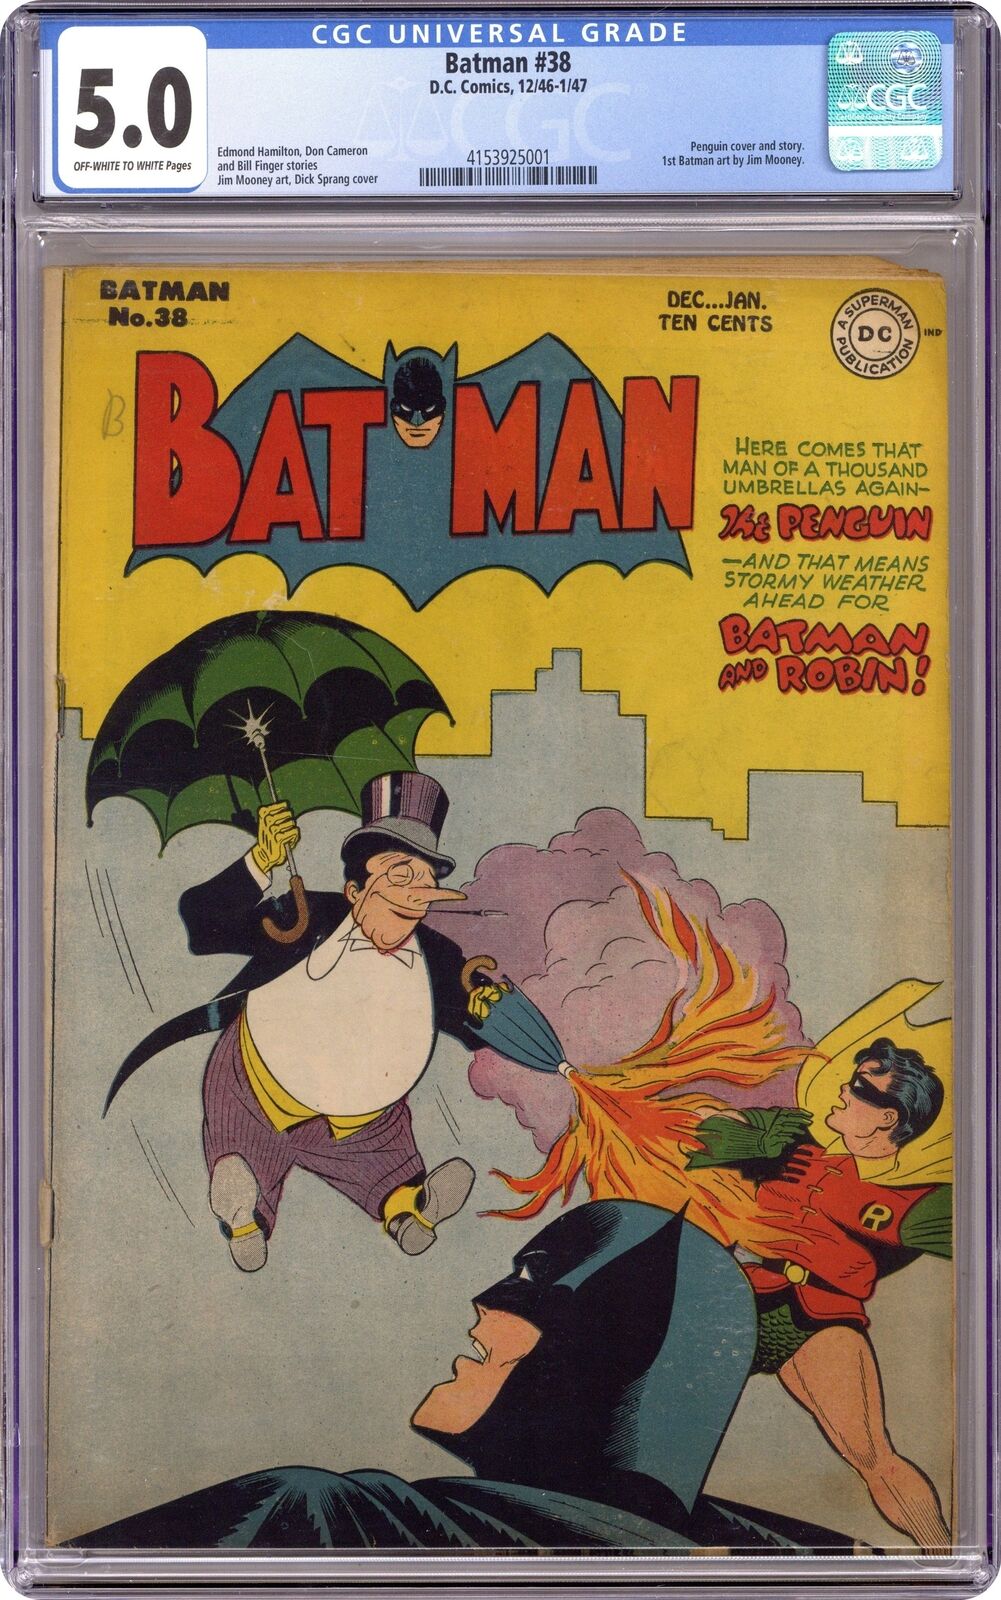 Batman #38 CGC 5.0 1947 4153925001